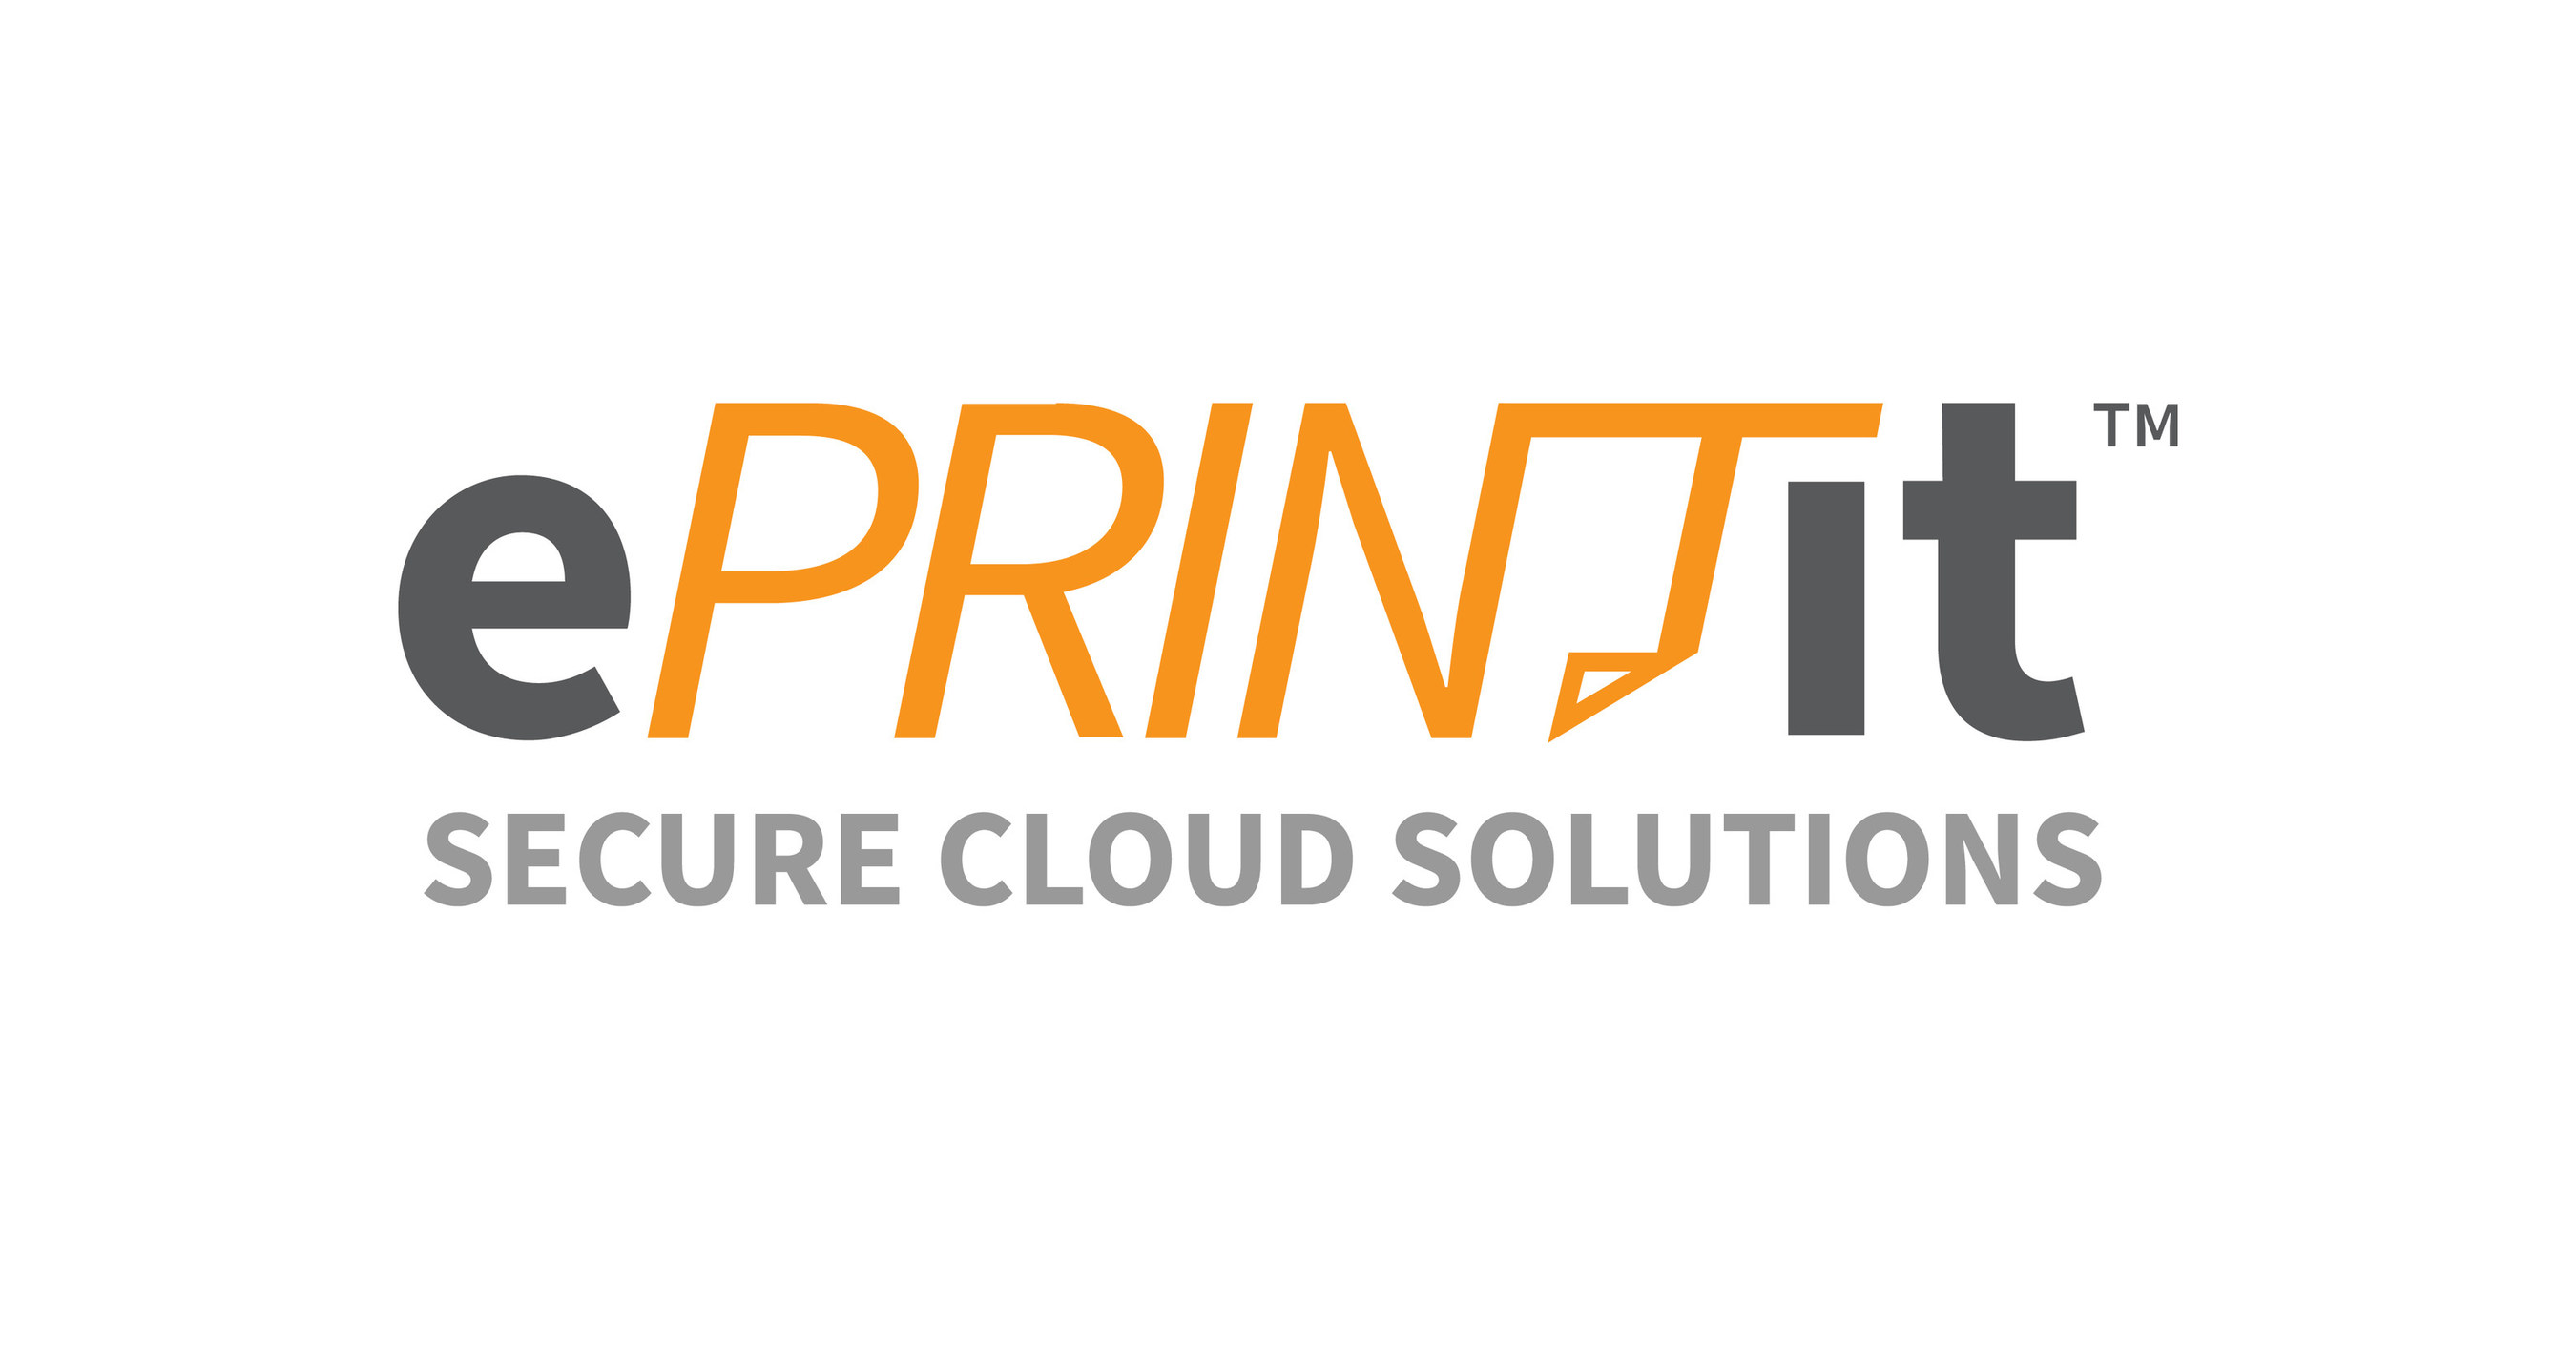 ePRINTit secure cloud solutions logo